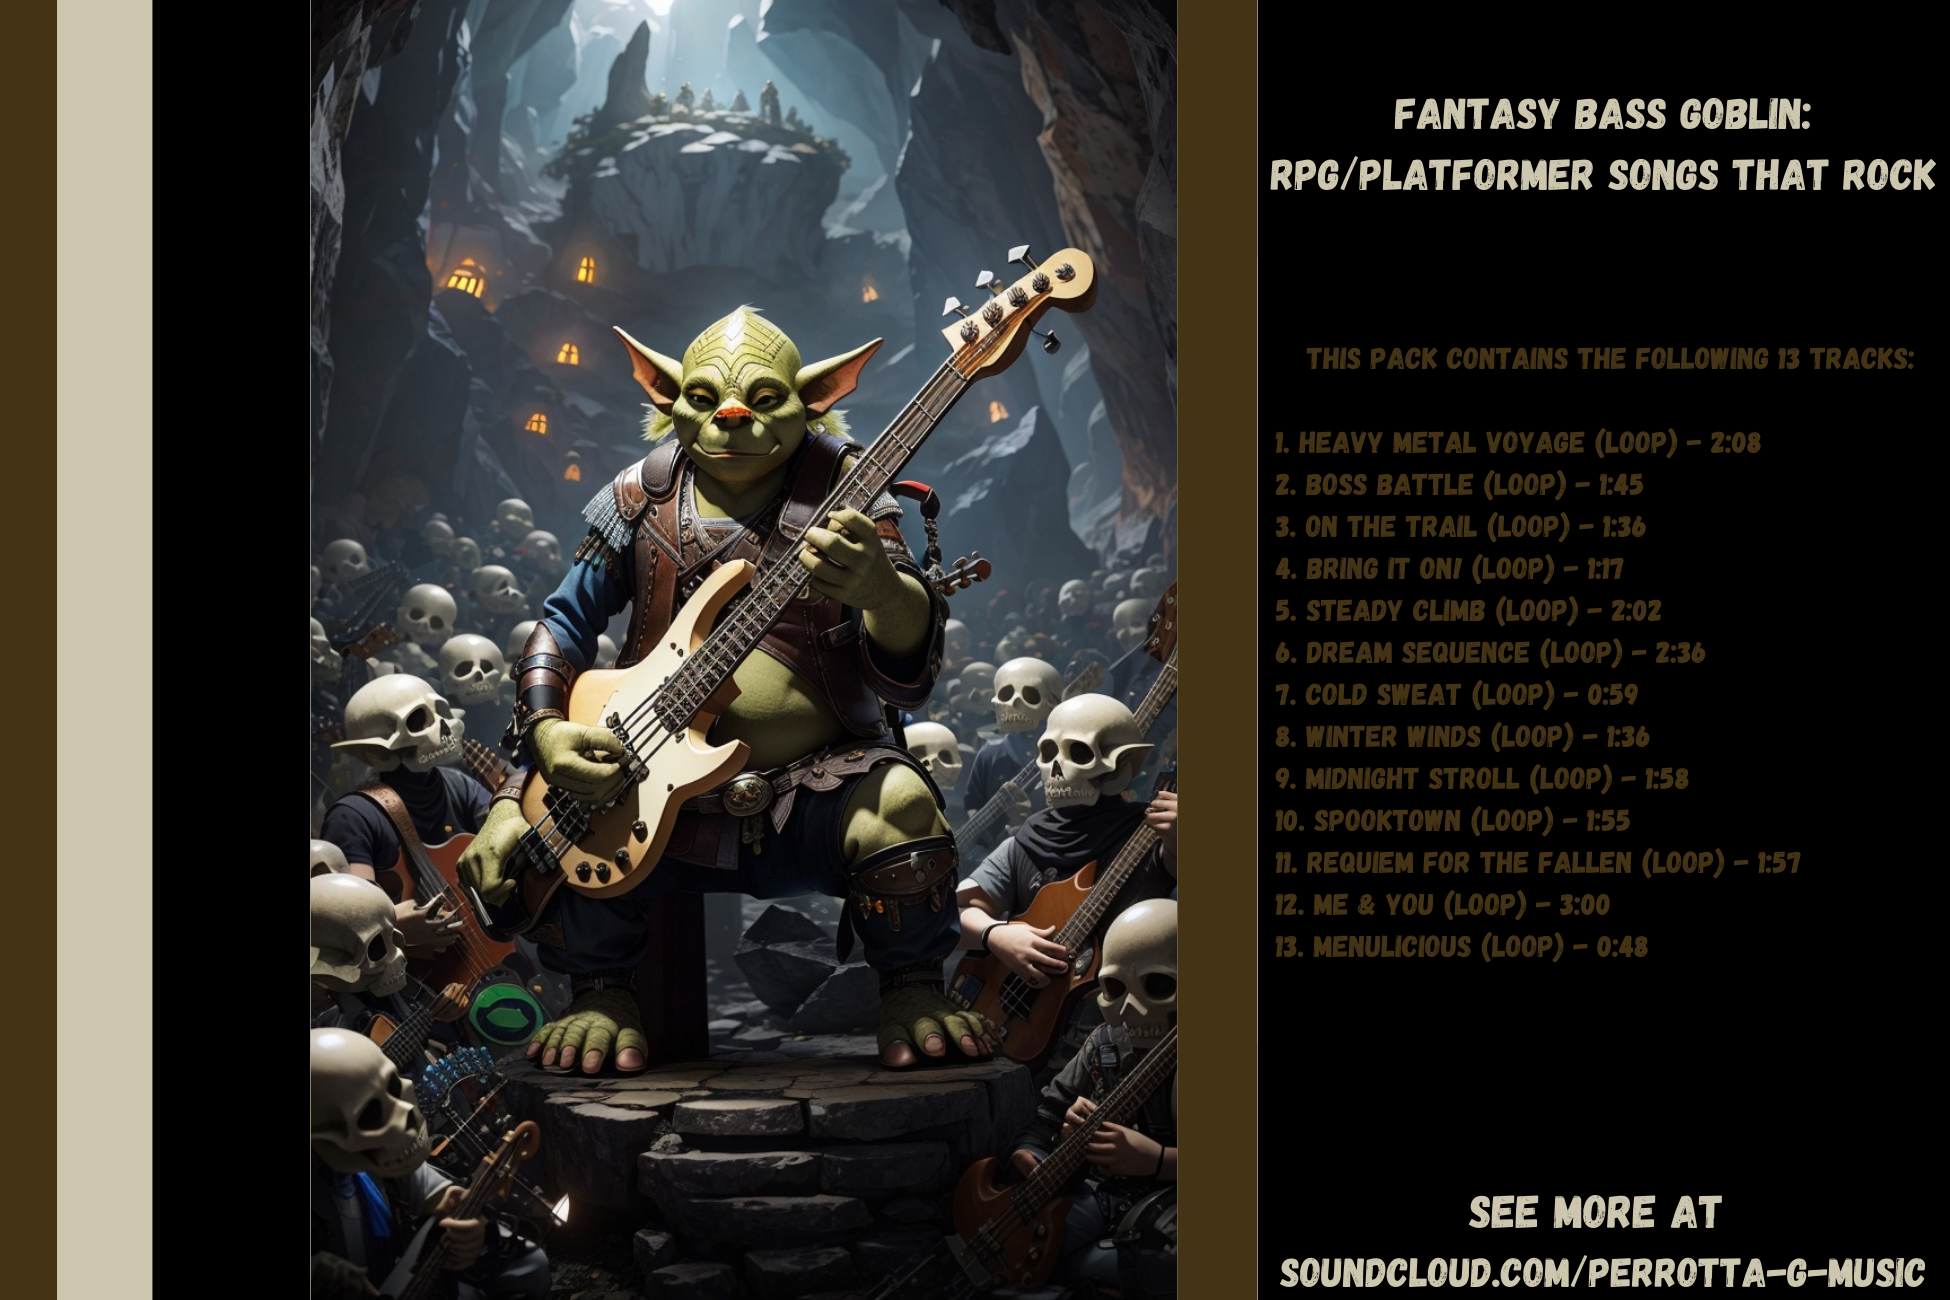 Fantasy Bass Goblin: RPG/Platformer Songs that Rock